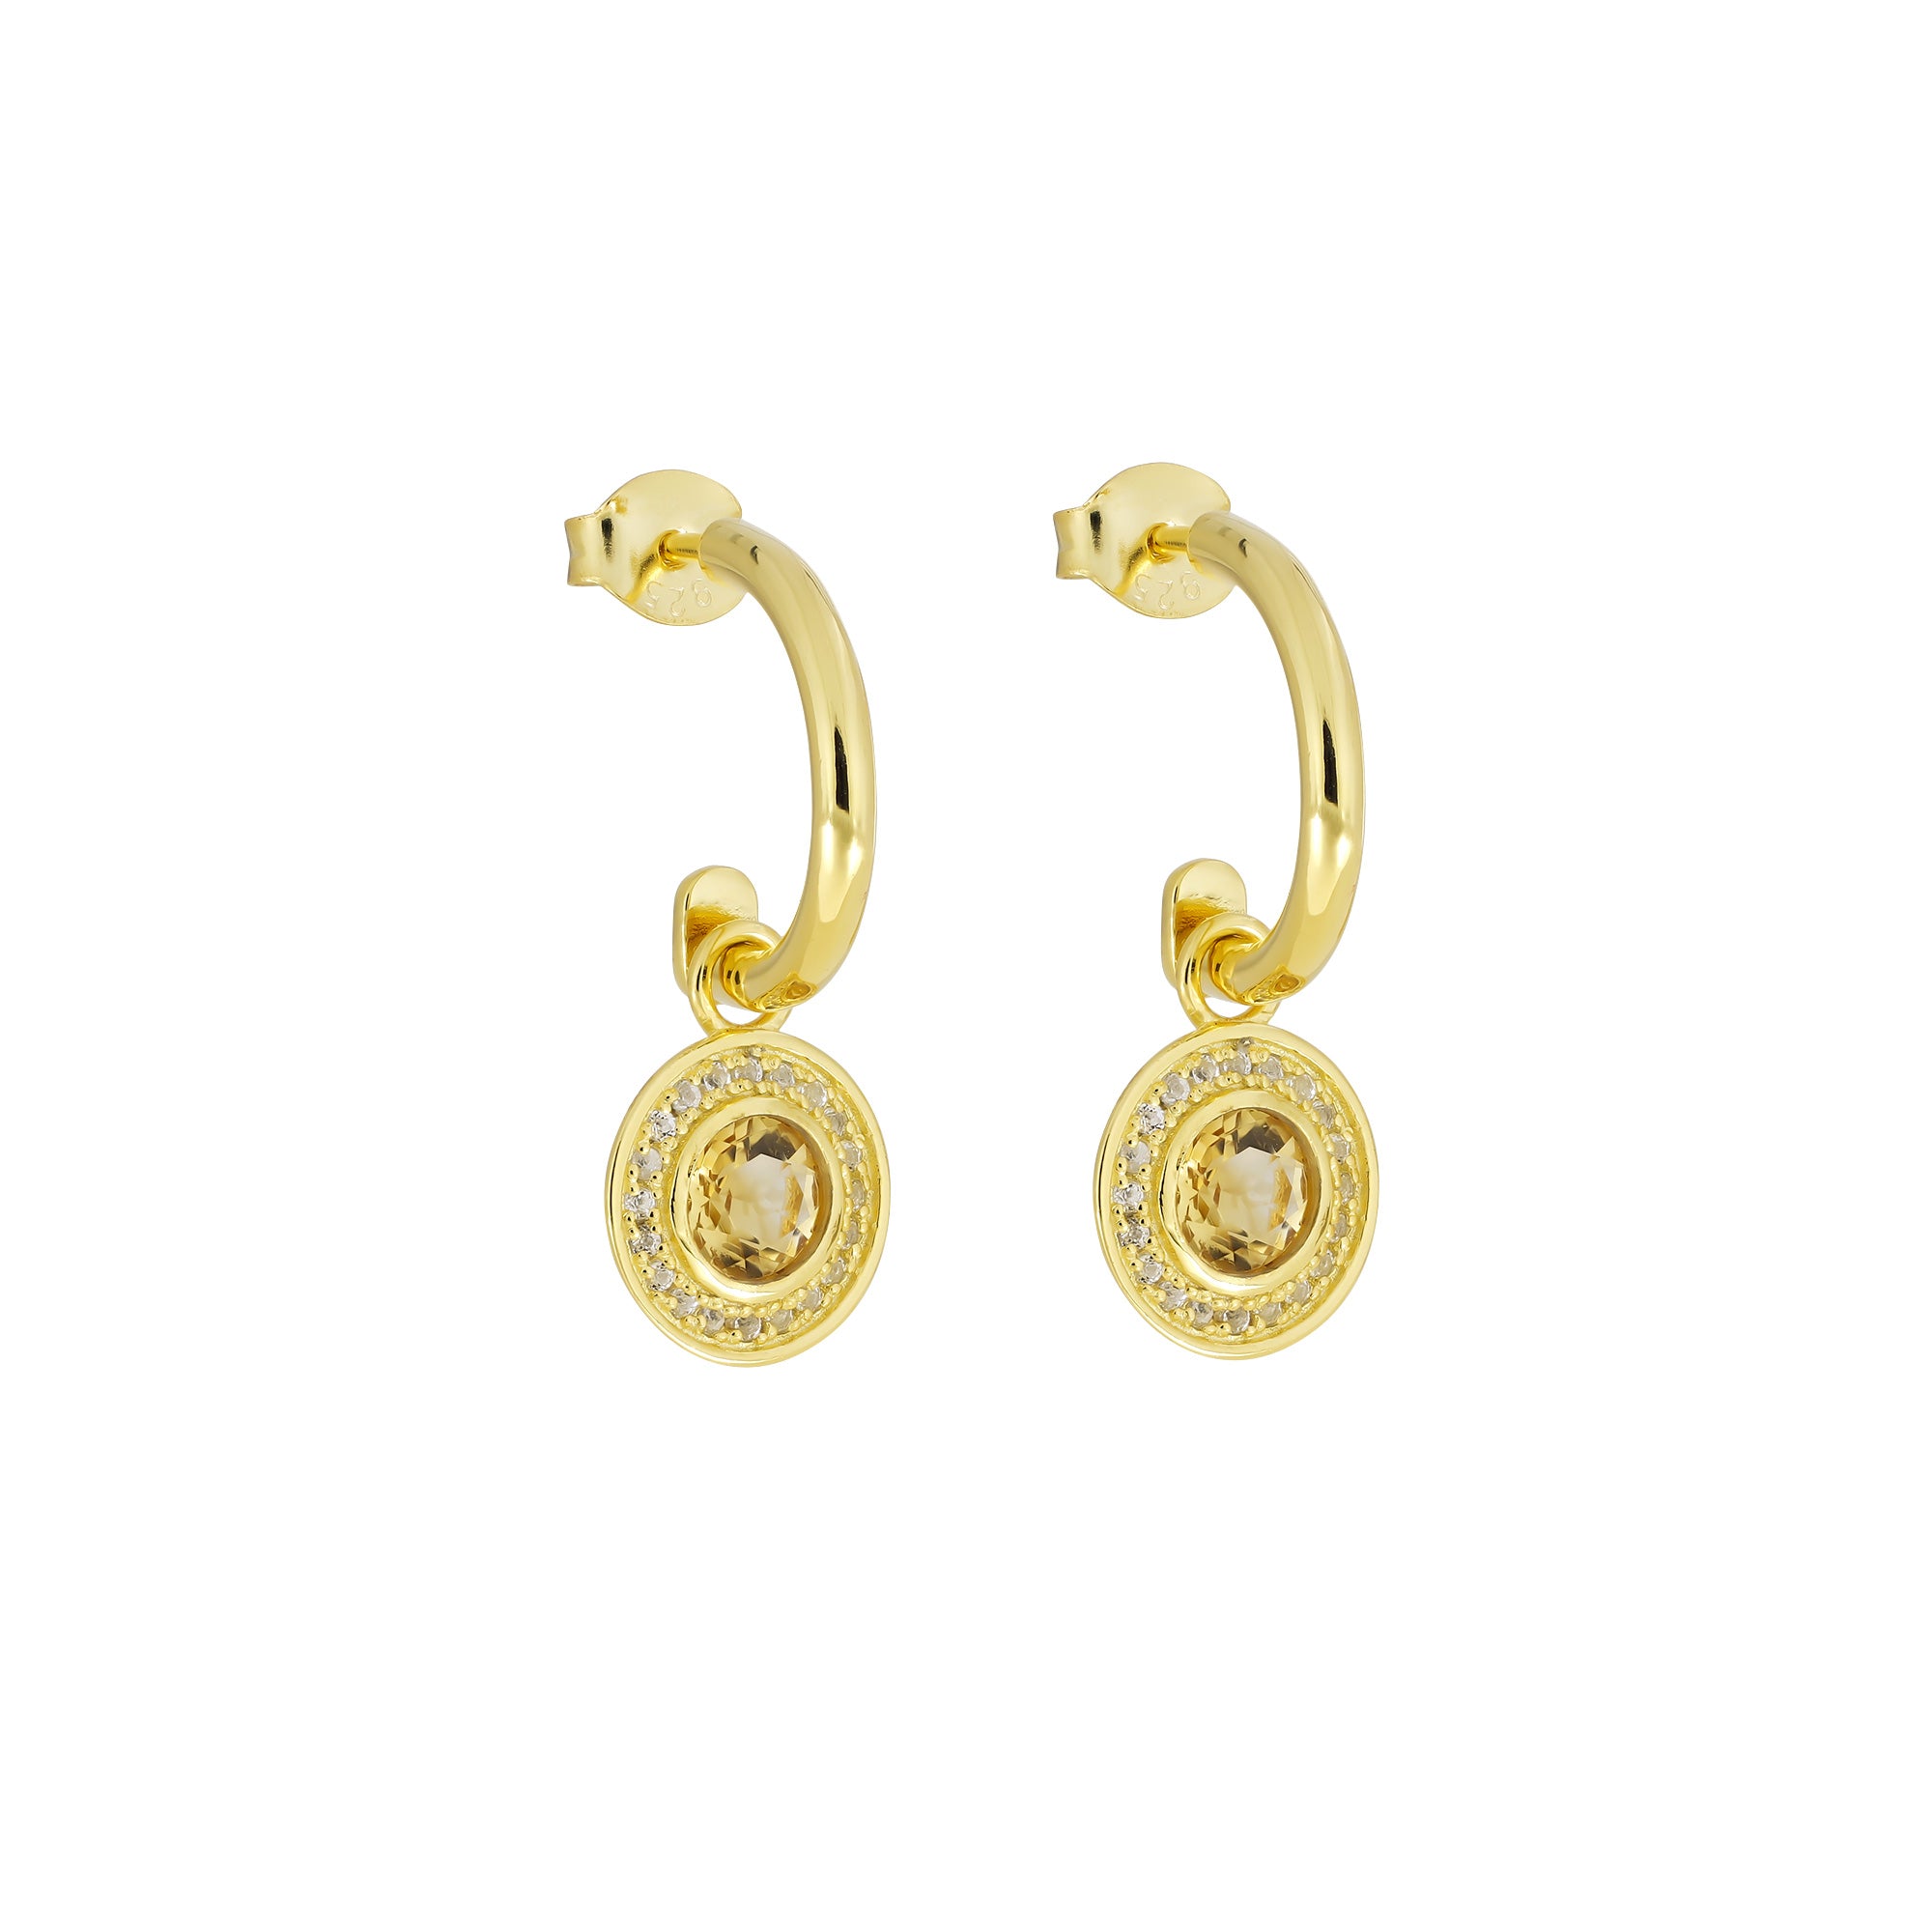 Citrene & White Topaz Drop Earrings in Yellow Gold Vermeil